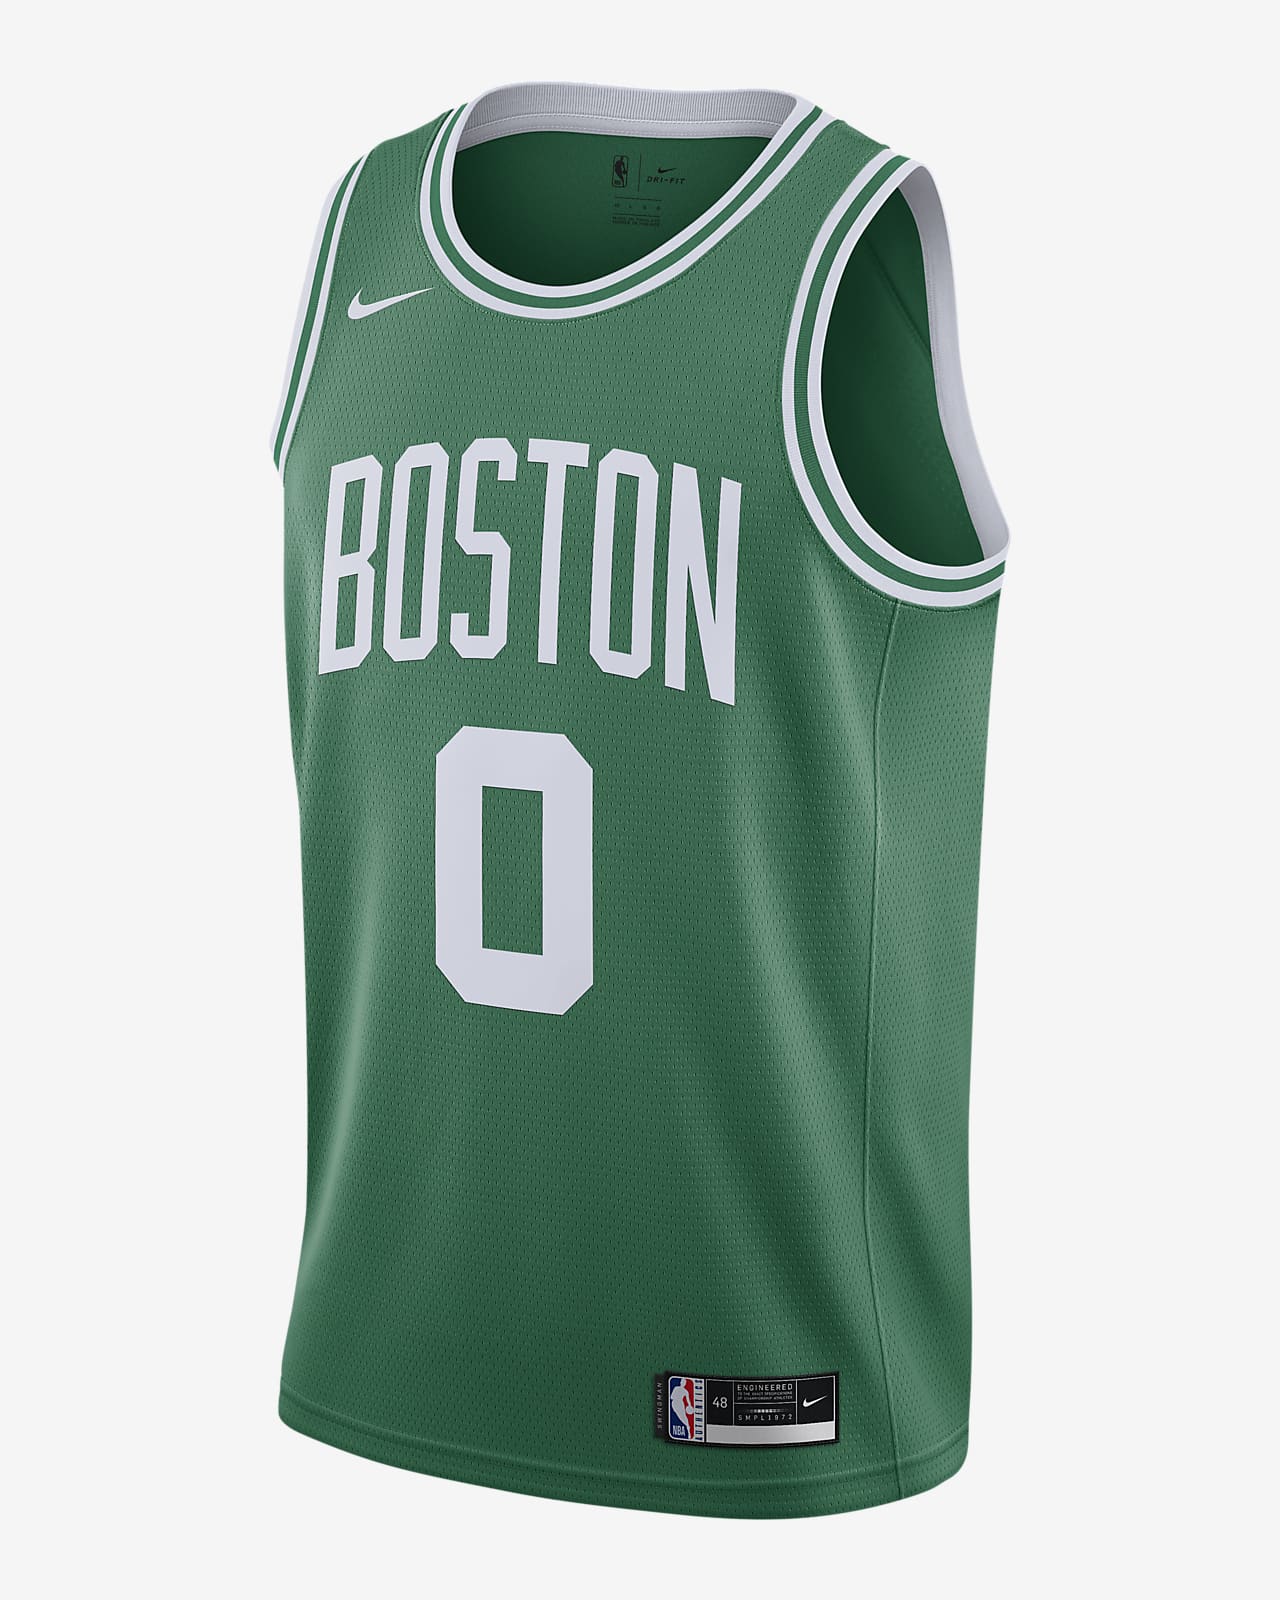 Celtics Icon Edition 2020 Nike NBA Swingman Jersey